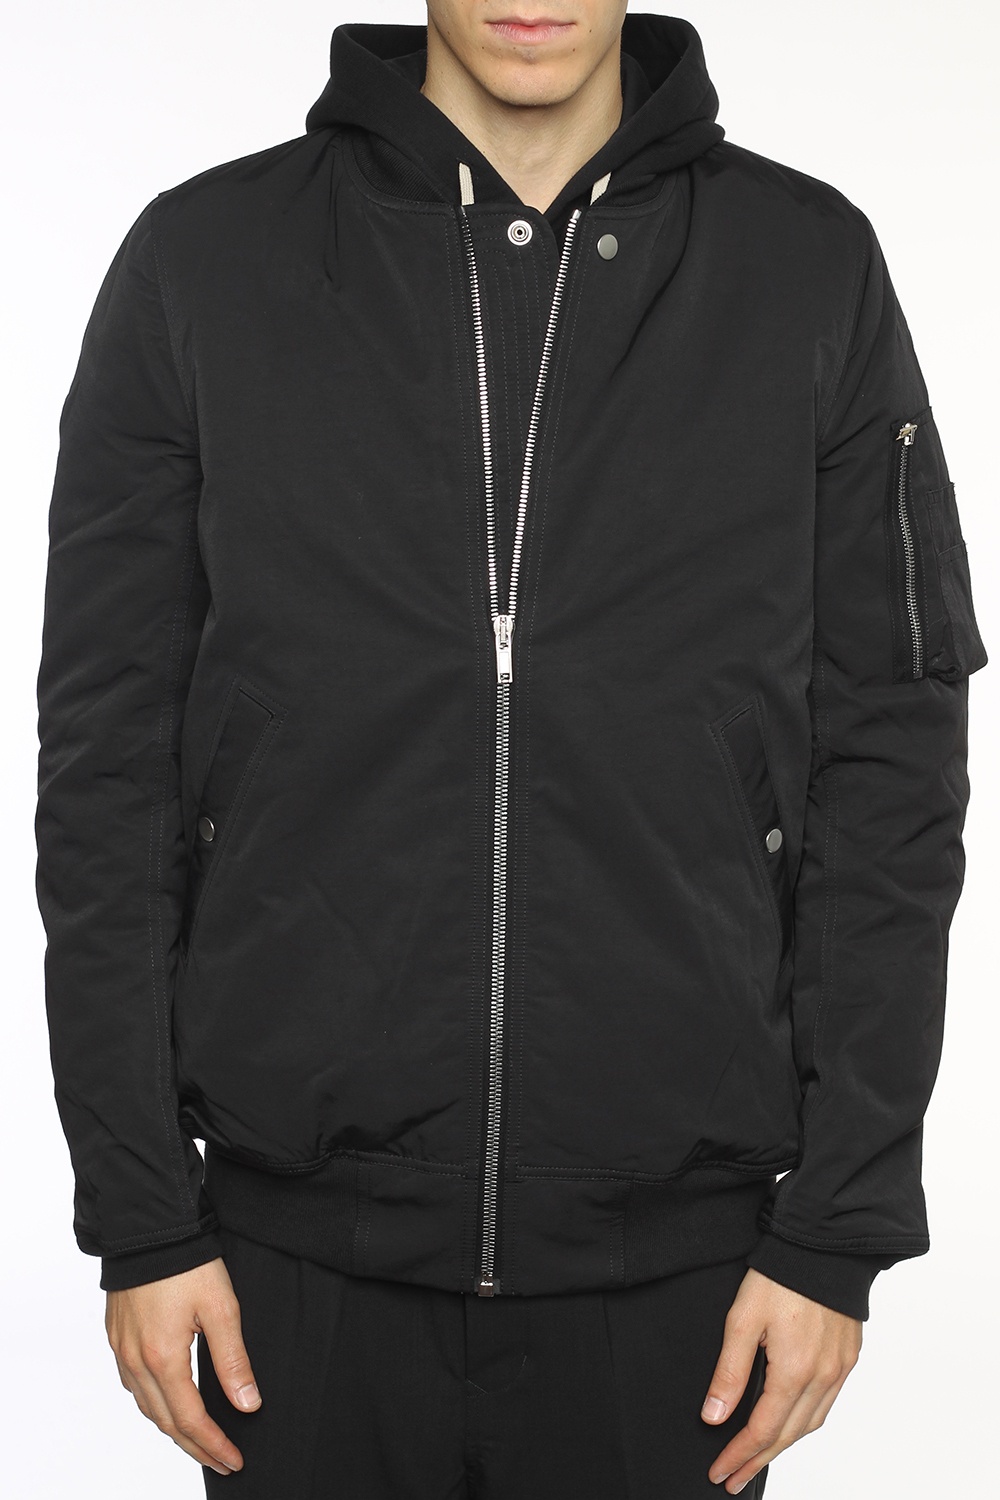 Rick Owens DRKSHDW Bomber jacket | Men's Clothing | Vitkac